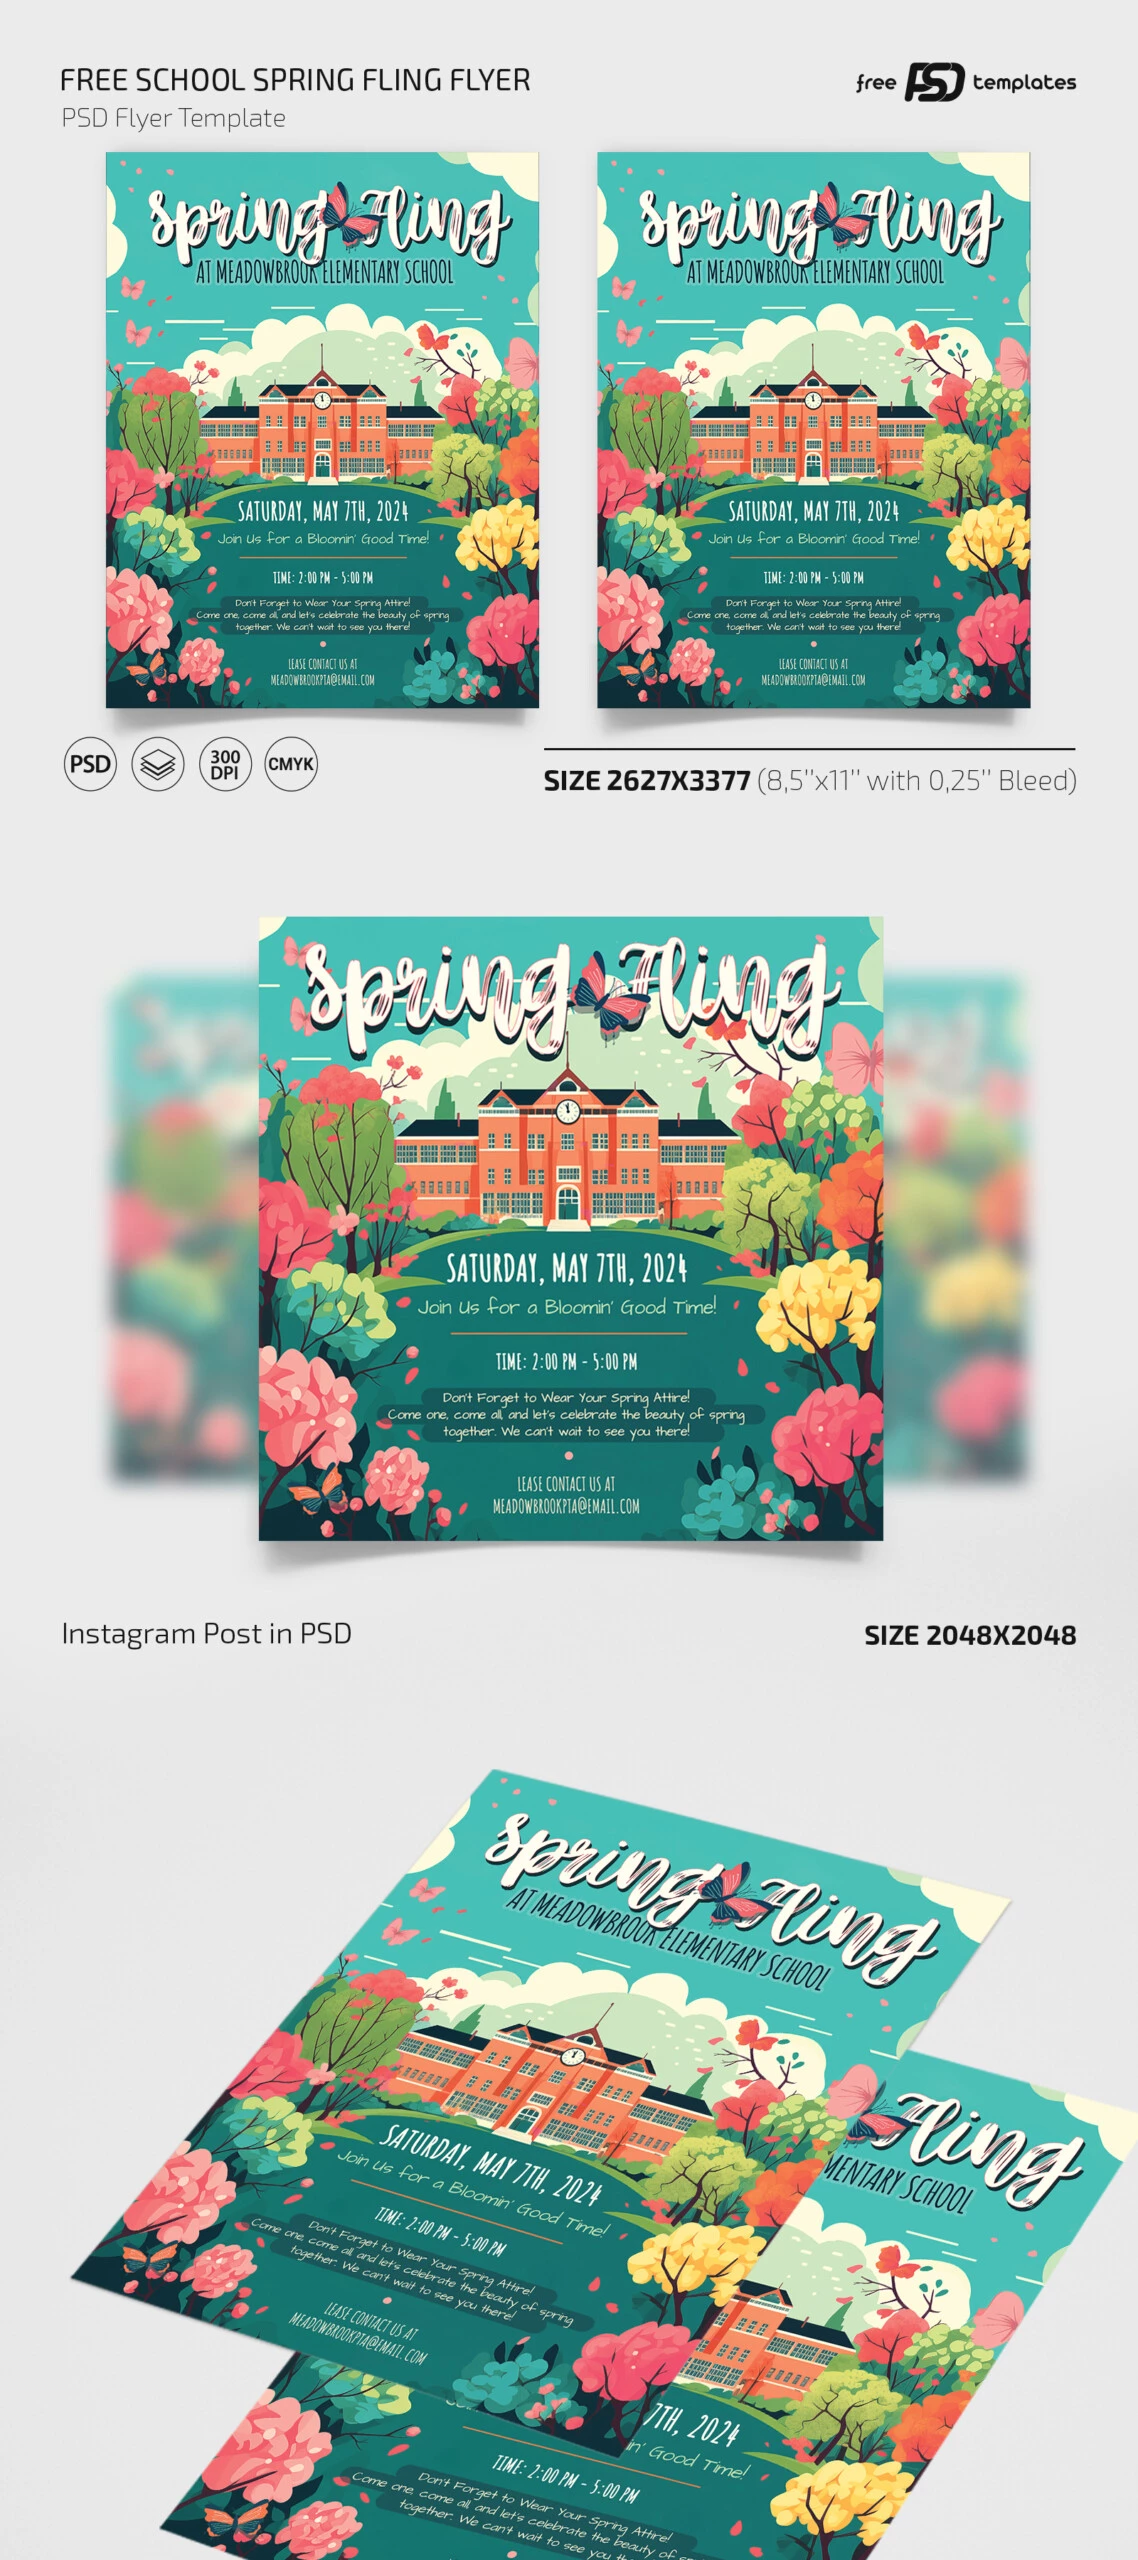 Free School Spring Fling Flyer PSD Template